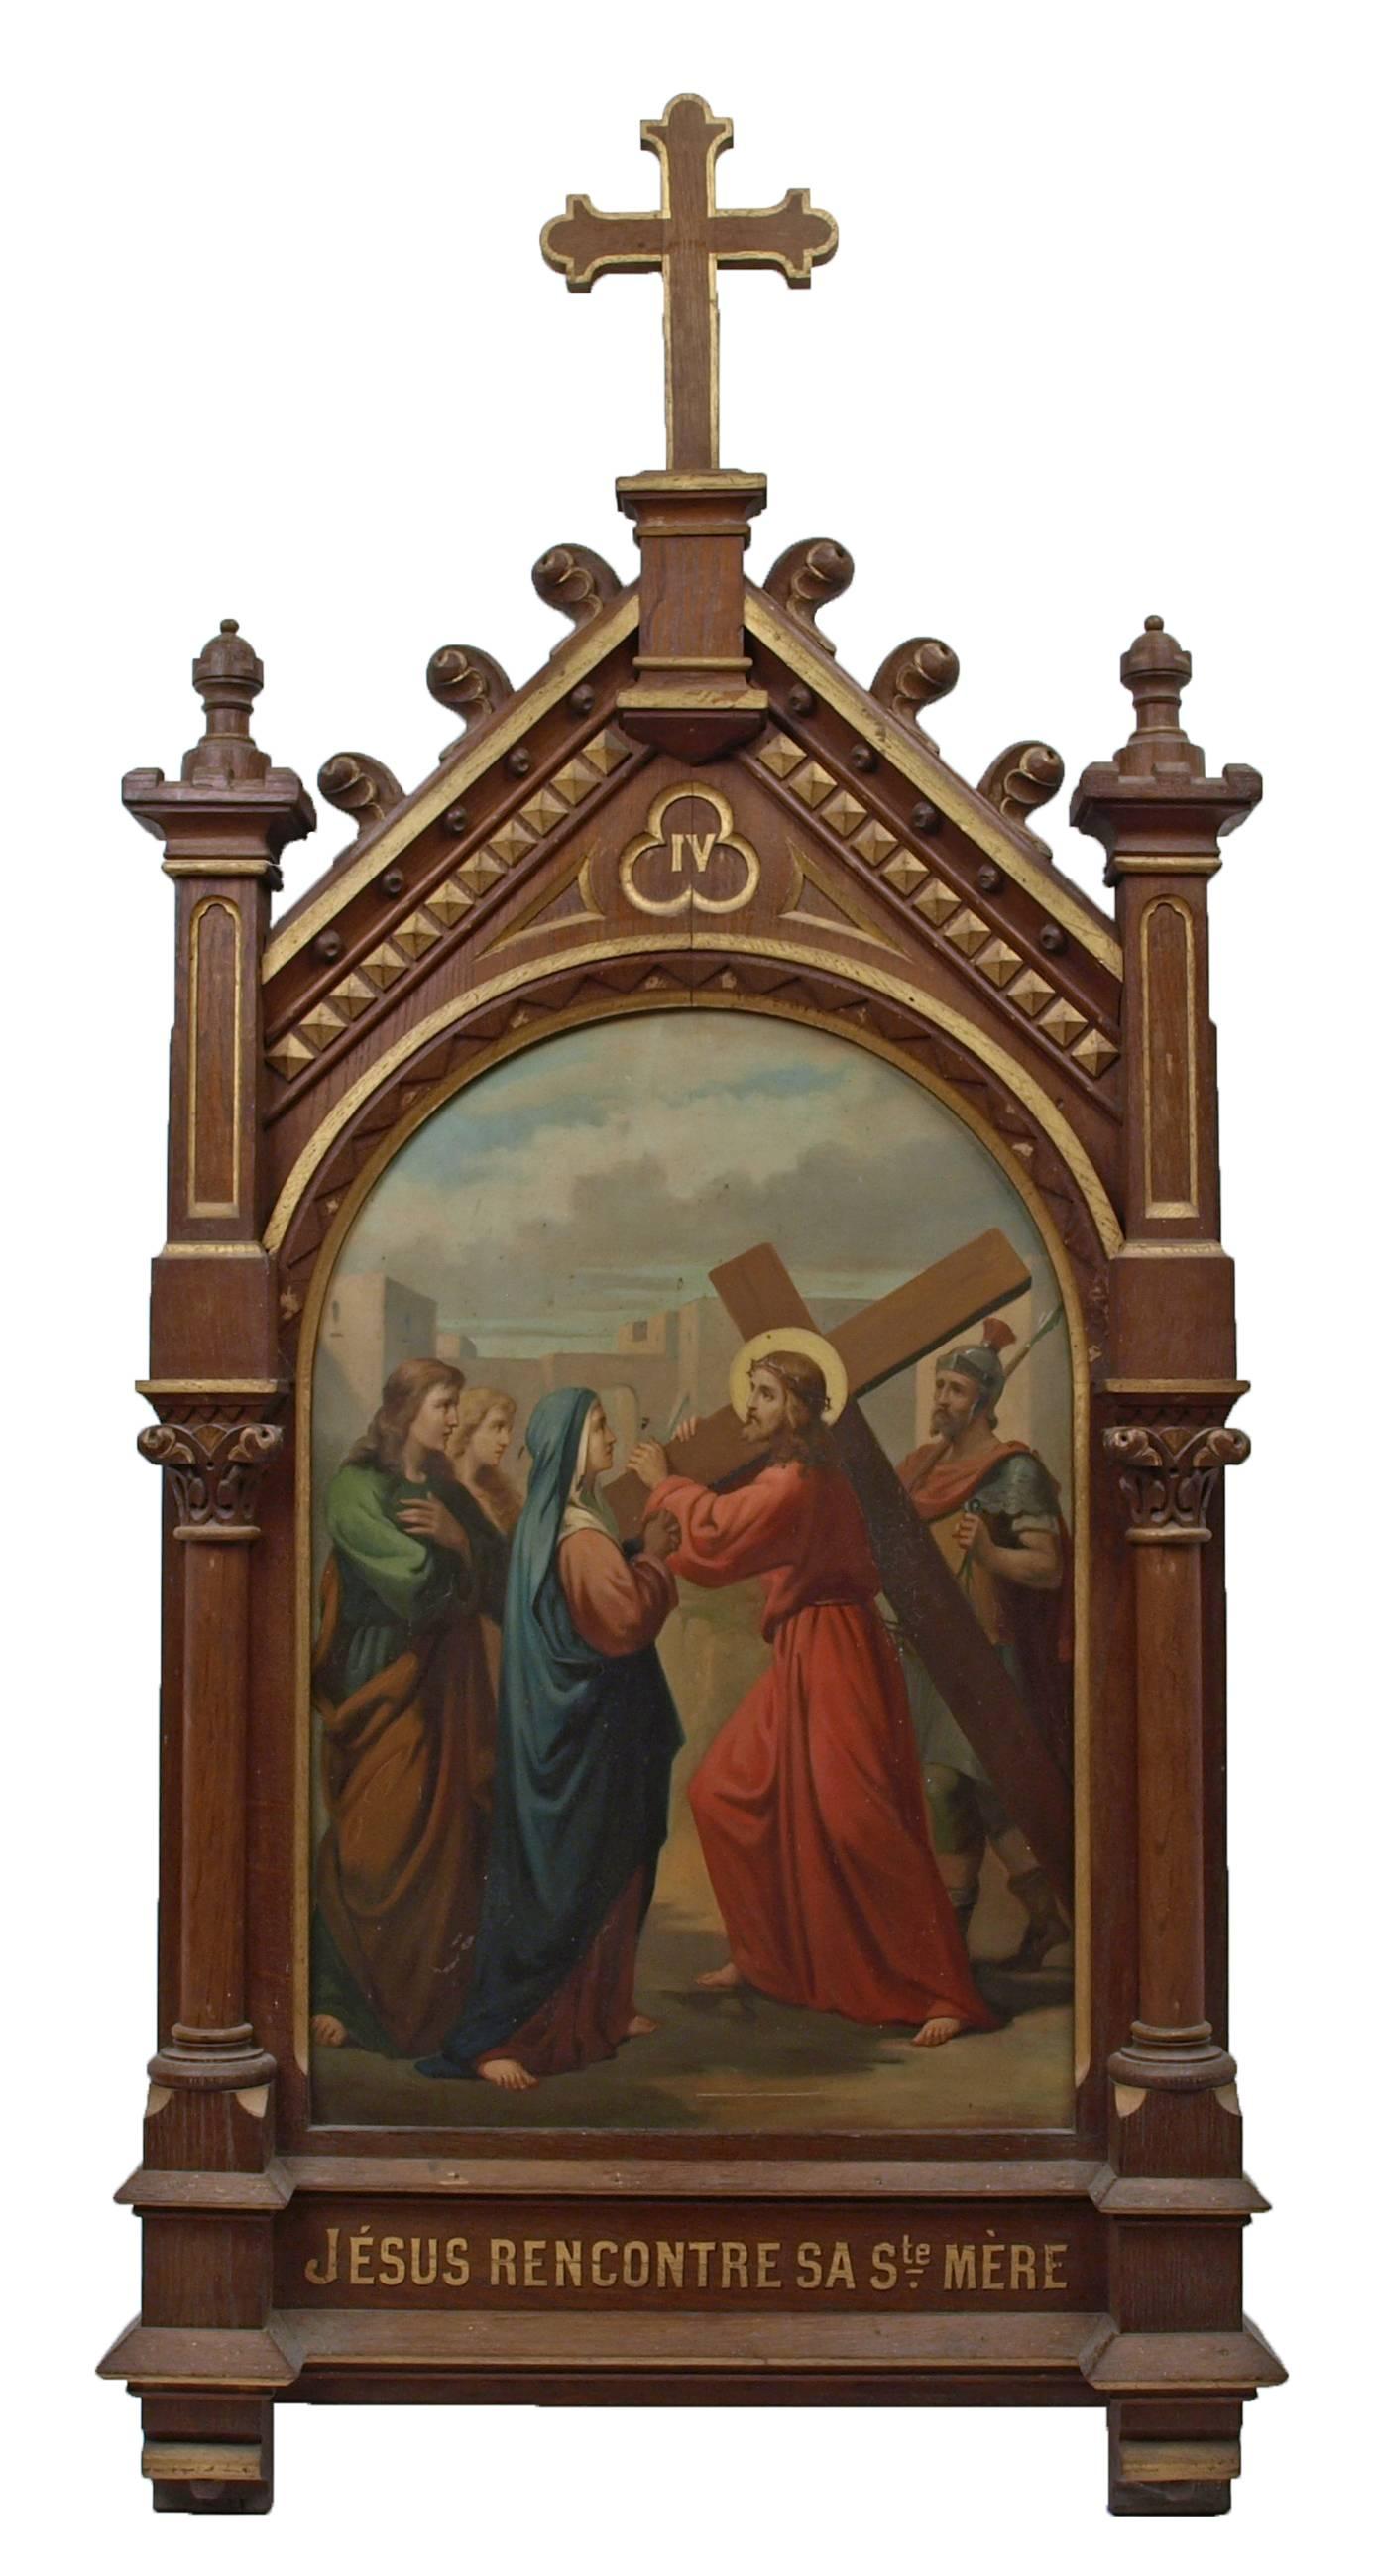 19th century religious art